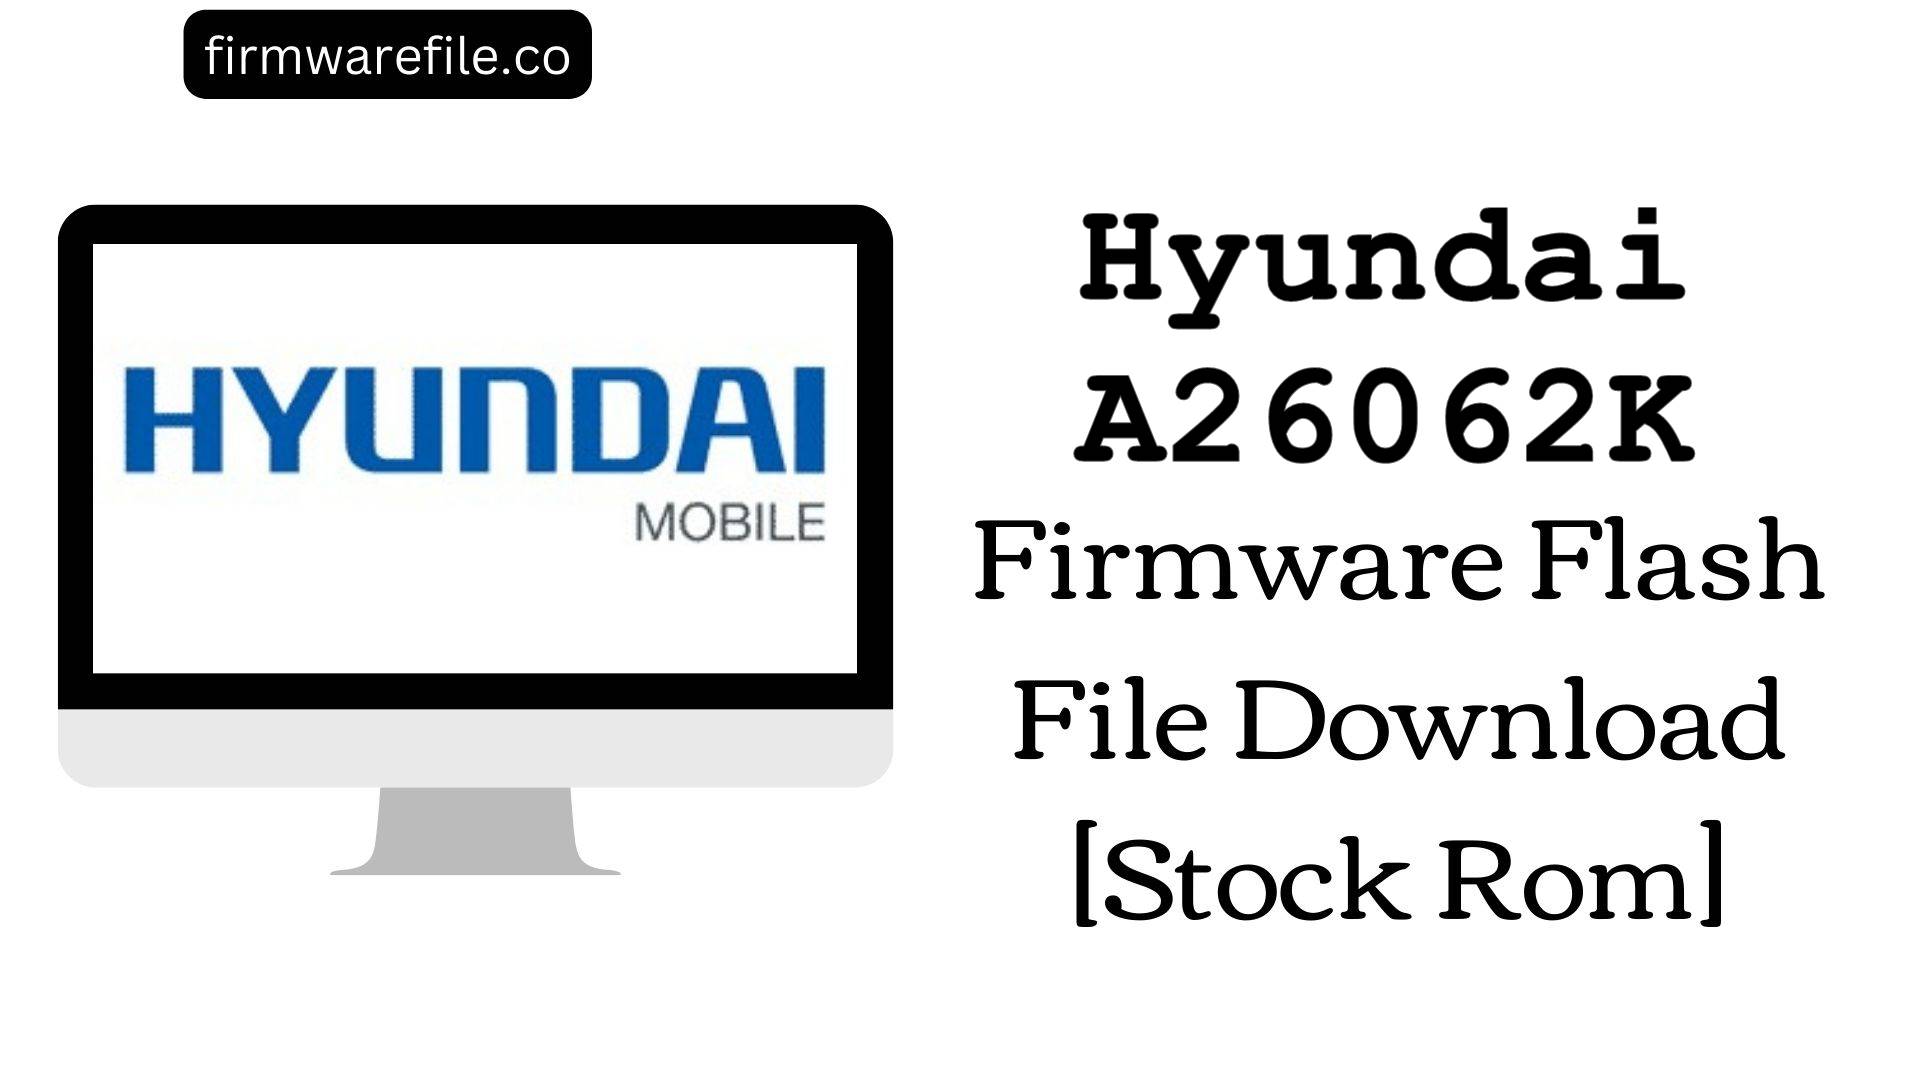 Hyundai A26062K